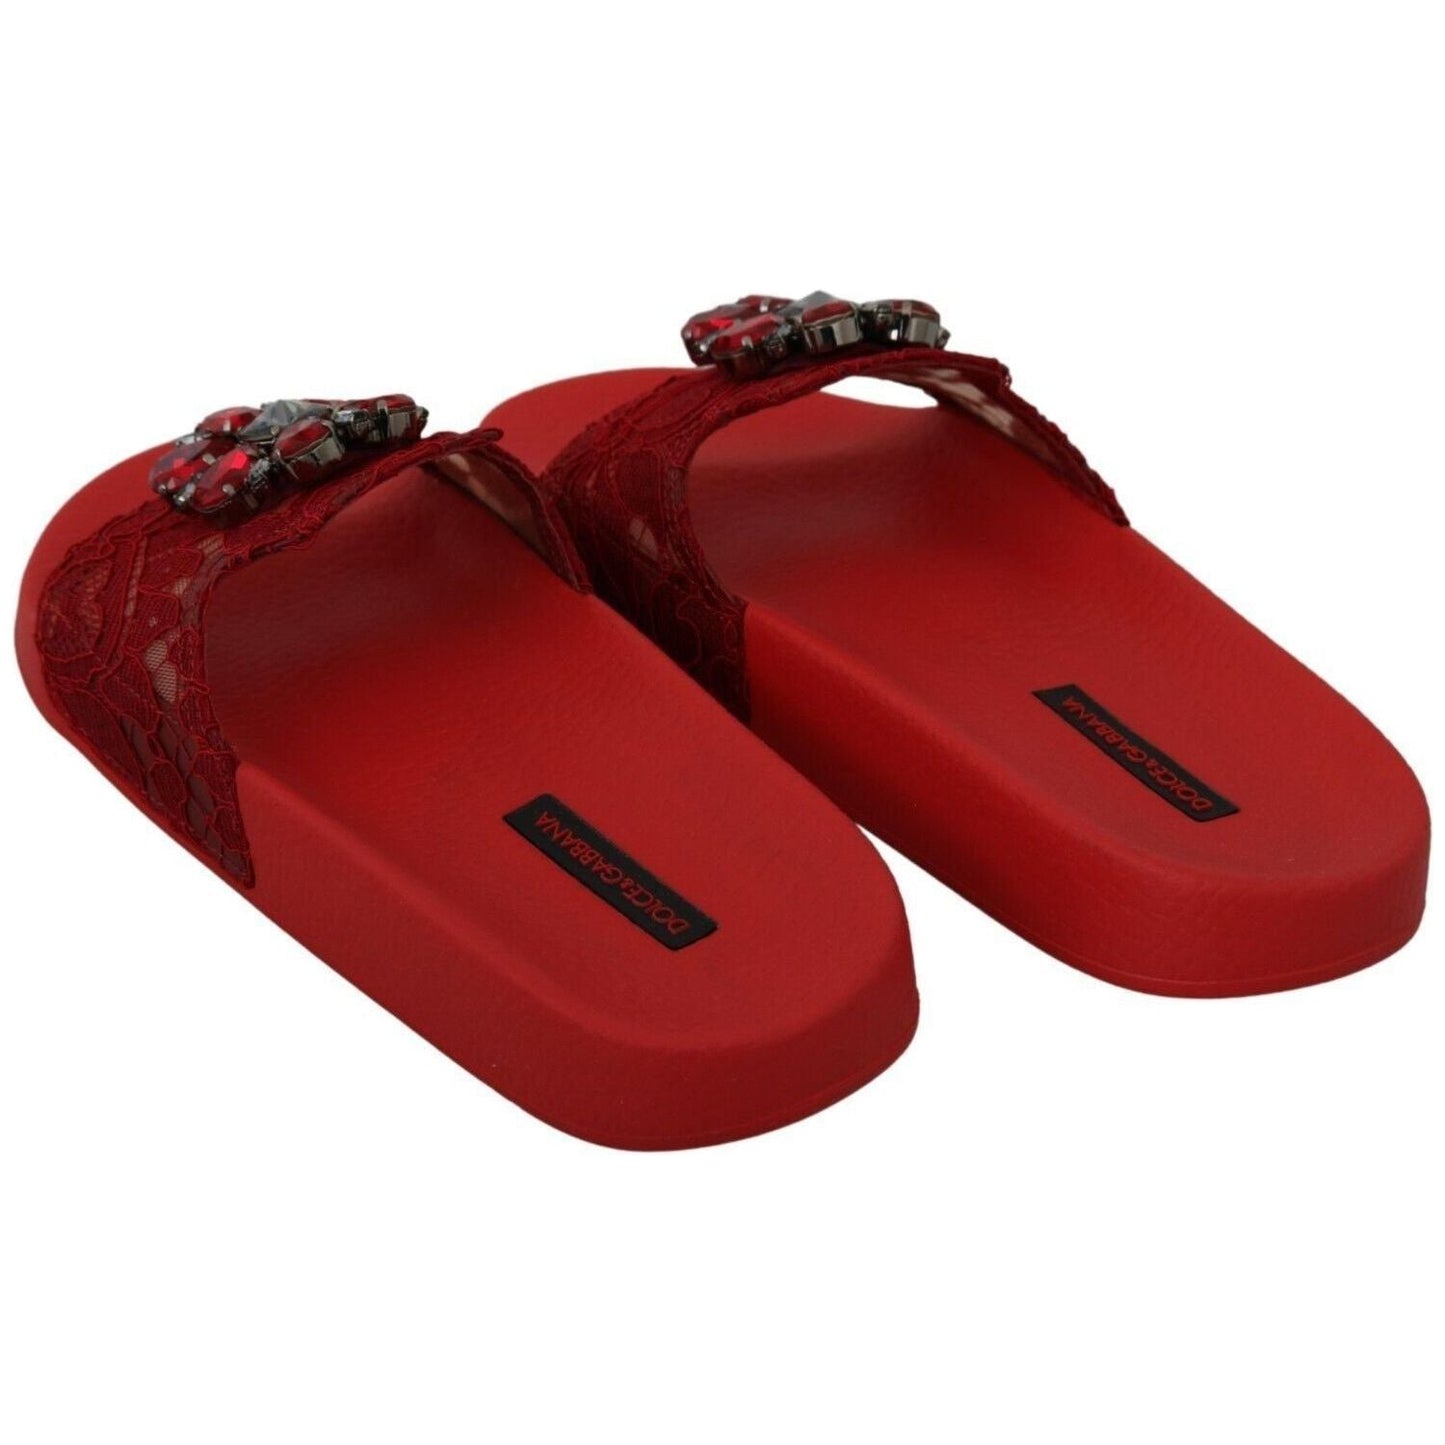 Dolce & Gabbana Floral Lace Crystal-Embellished Slide Flats red-lace-crystal-sandals-slides-beach-shoes s-l1600-31-19-44ce00f2-8f5.jpg